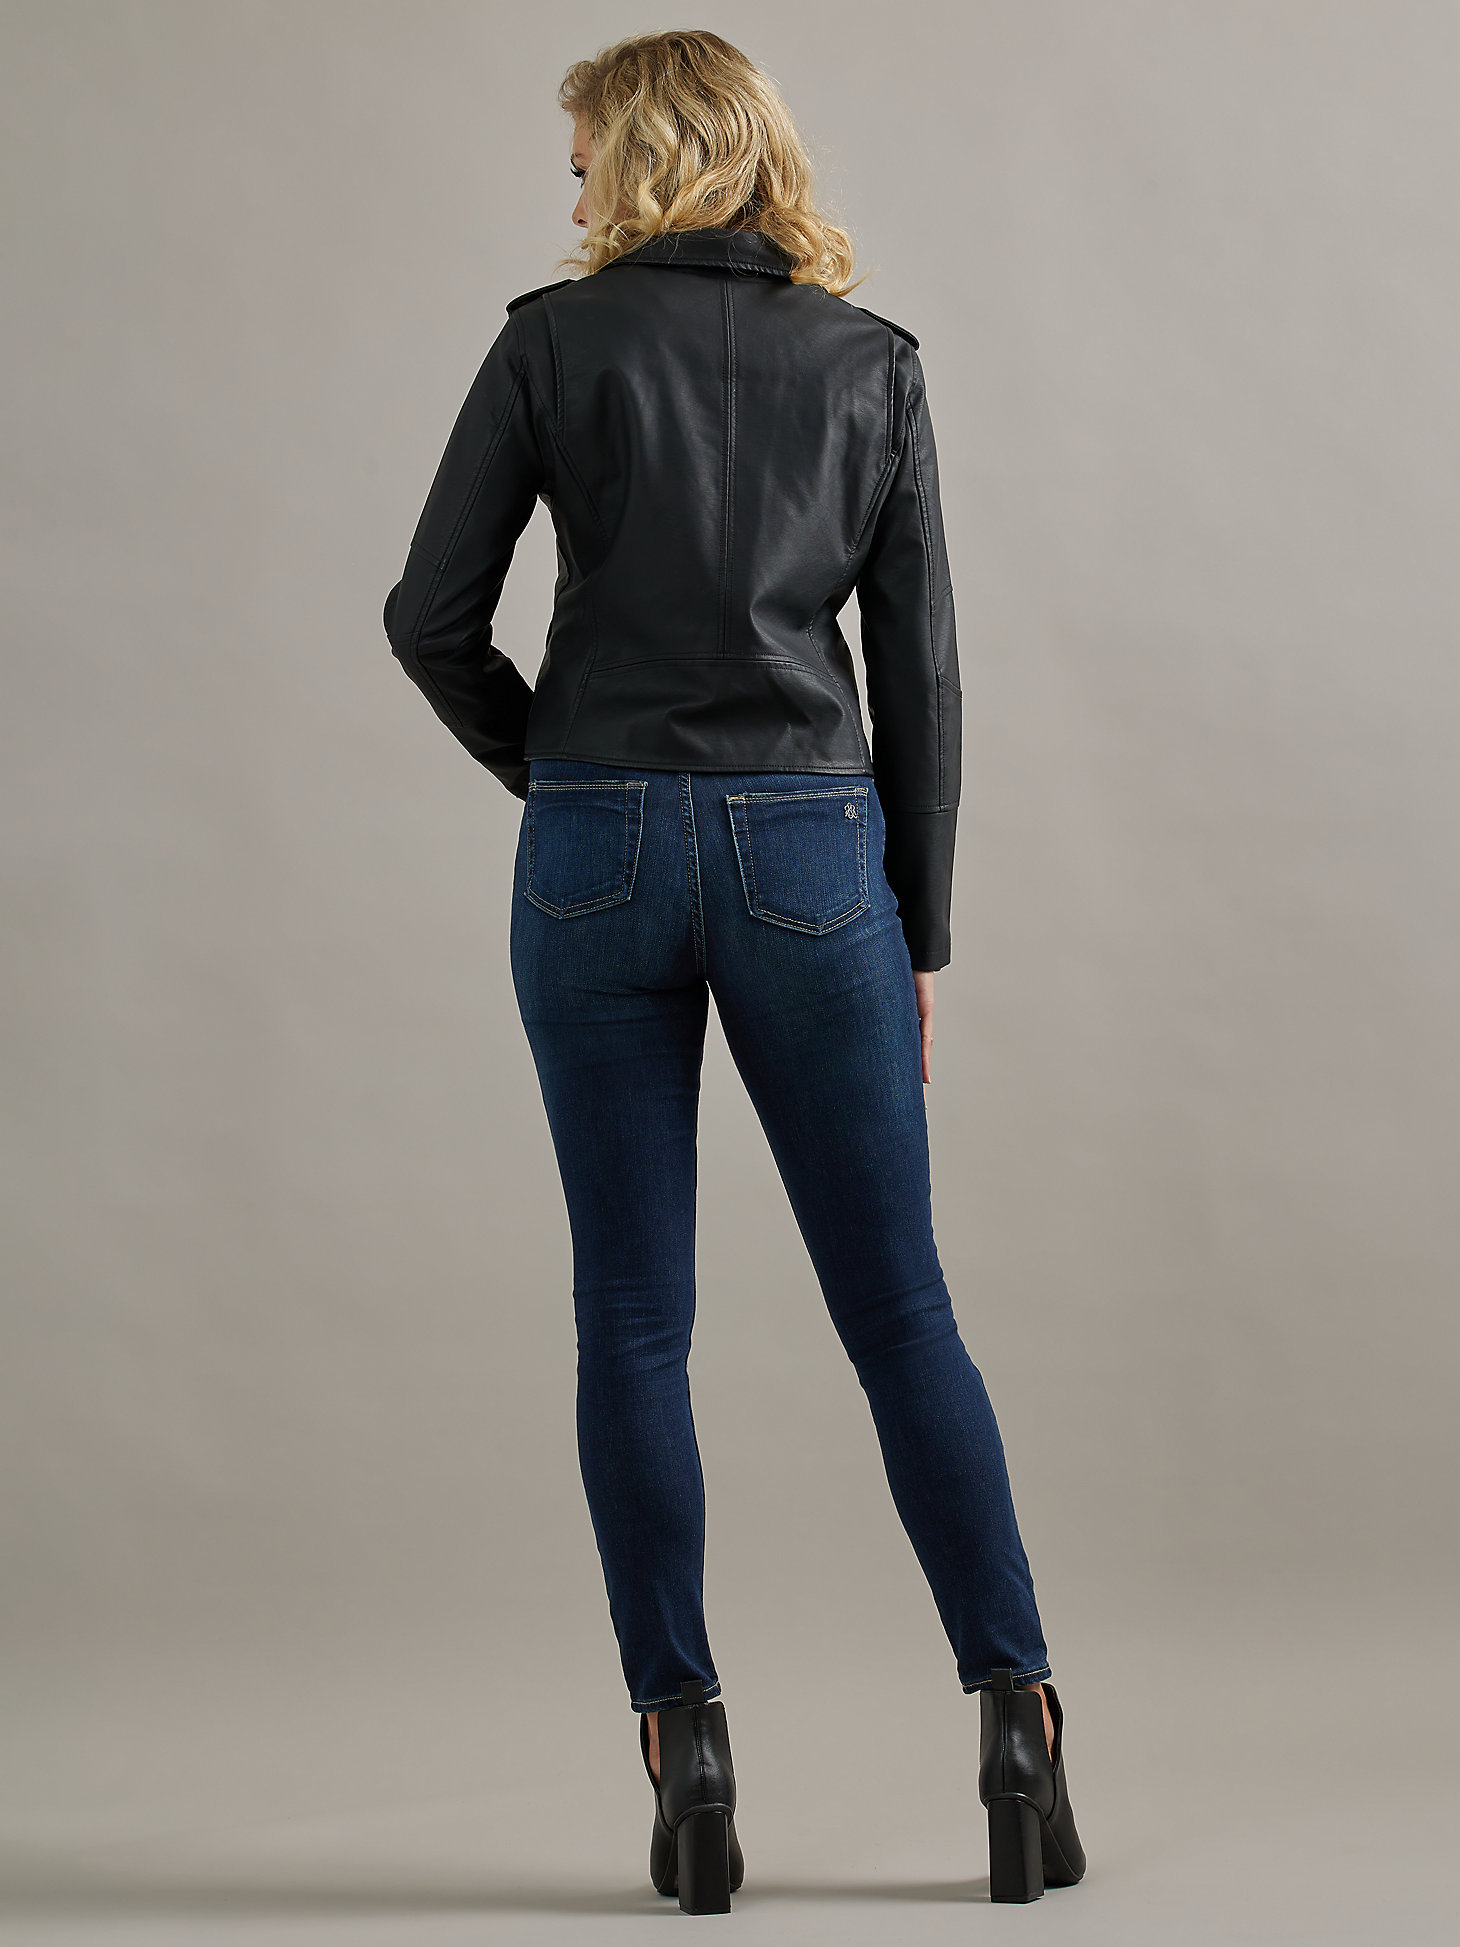 Women's Vegan Leather Jacket in Black alternative view 1